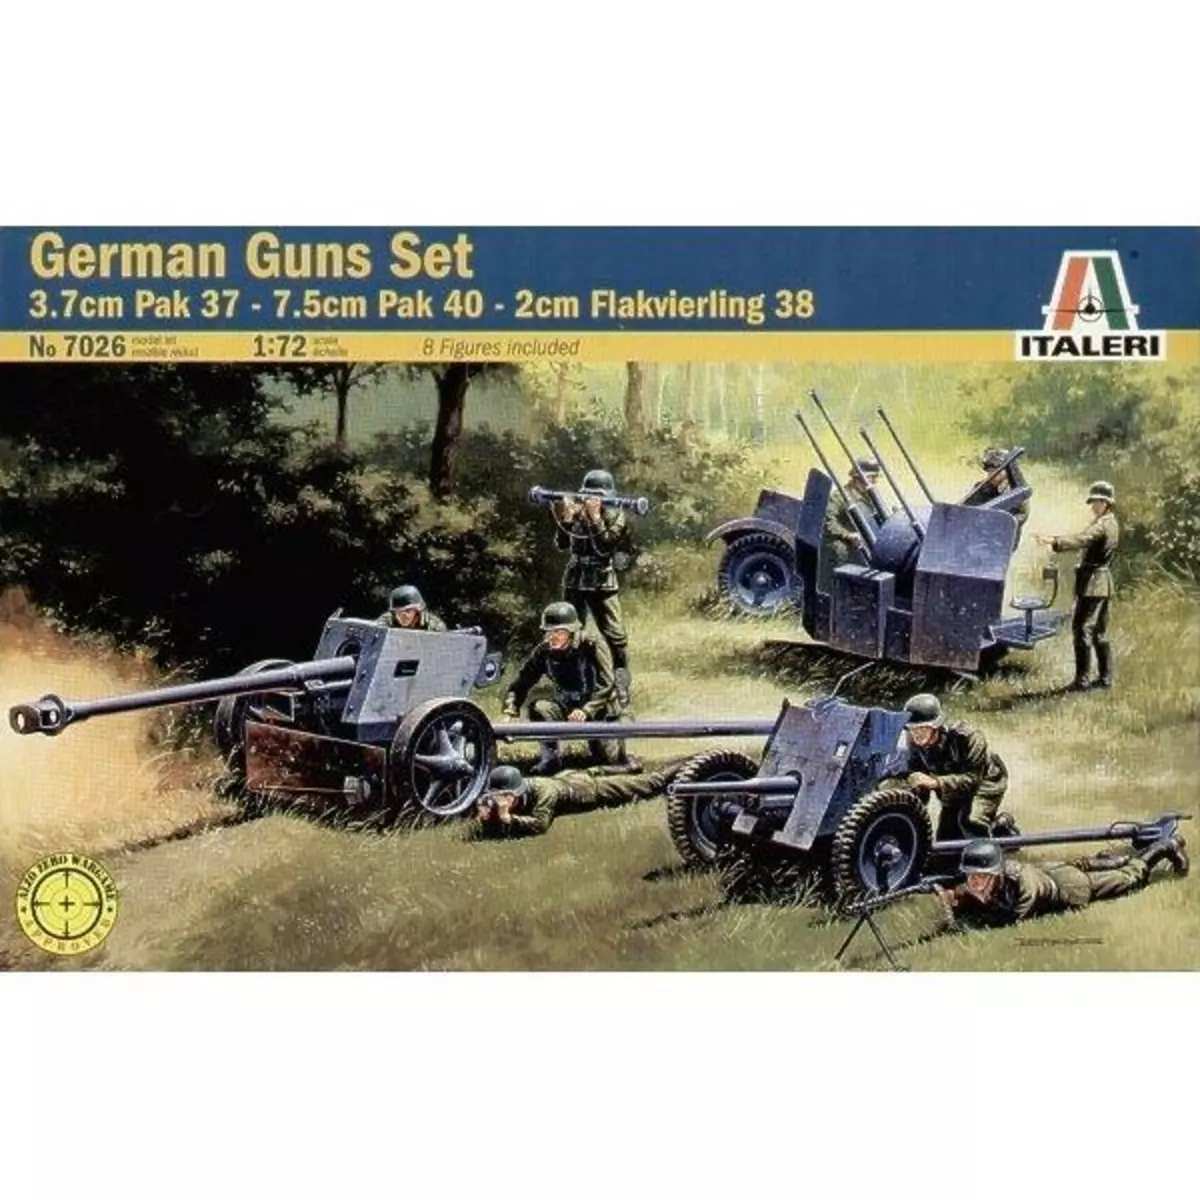 Italeri Maquettes canons allemands : Pak 37 / Pak 40 / Flakvierling 38 avec figurines